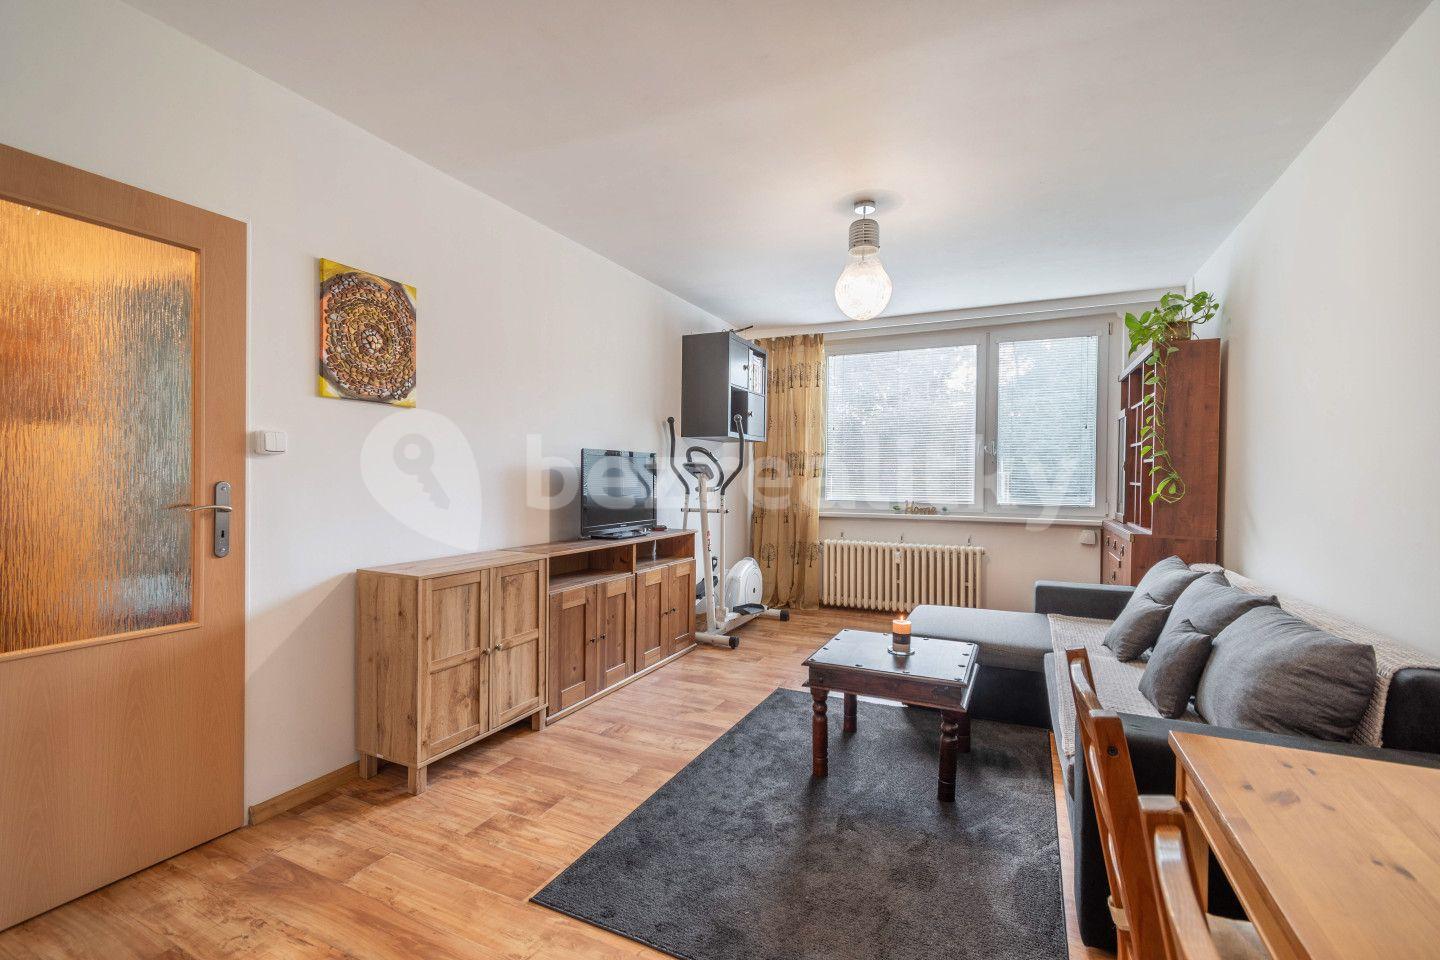 2 bedroom with open-plan kitchen flat for sale, 66 m², Petýrkova, Prague, Prague